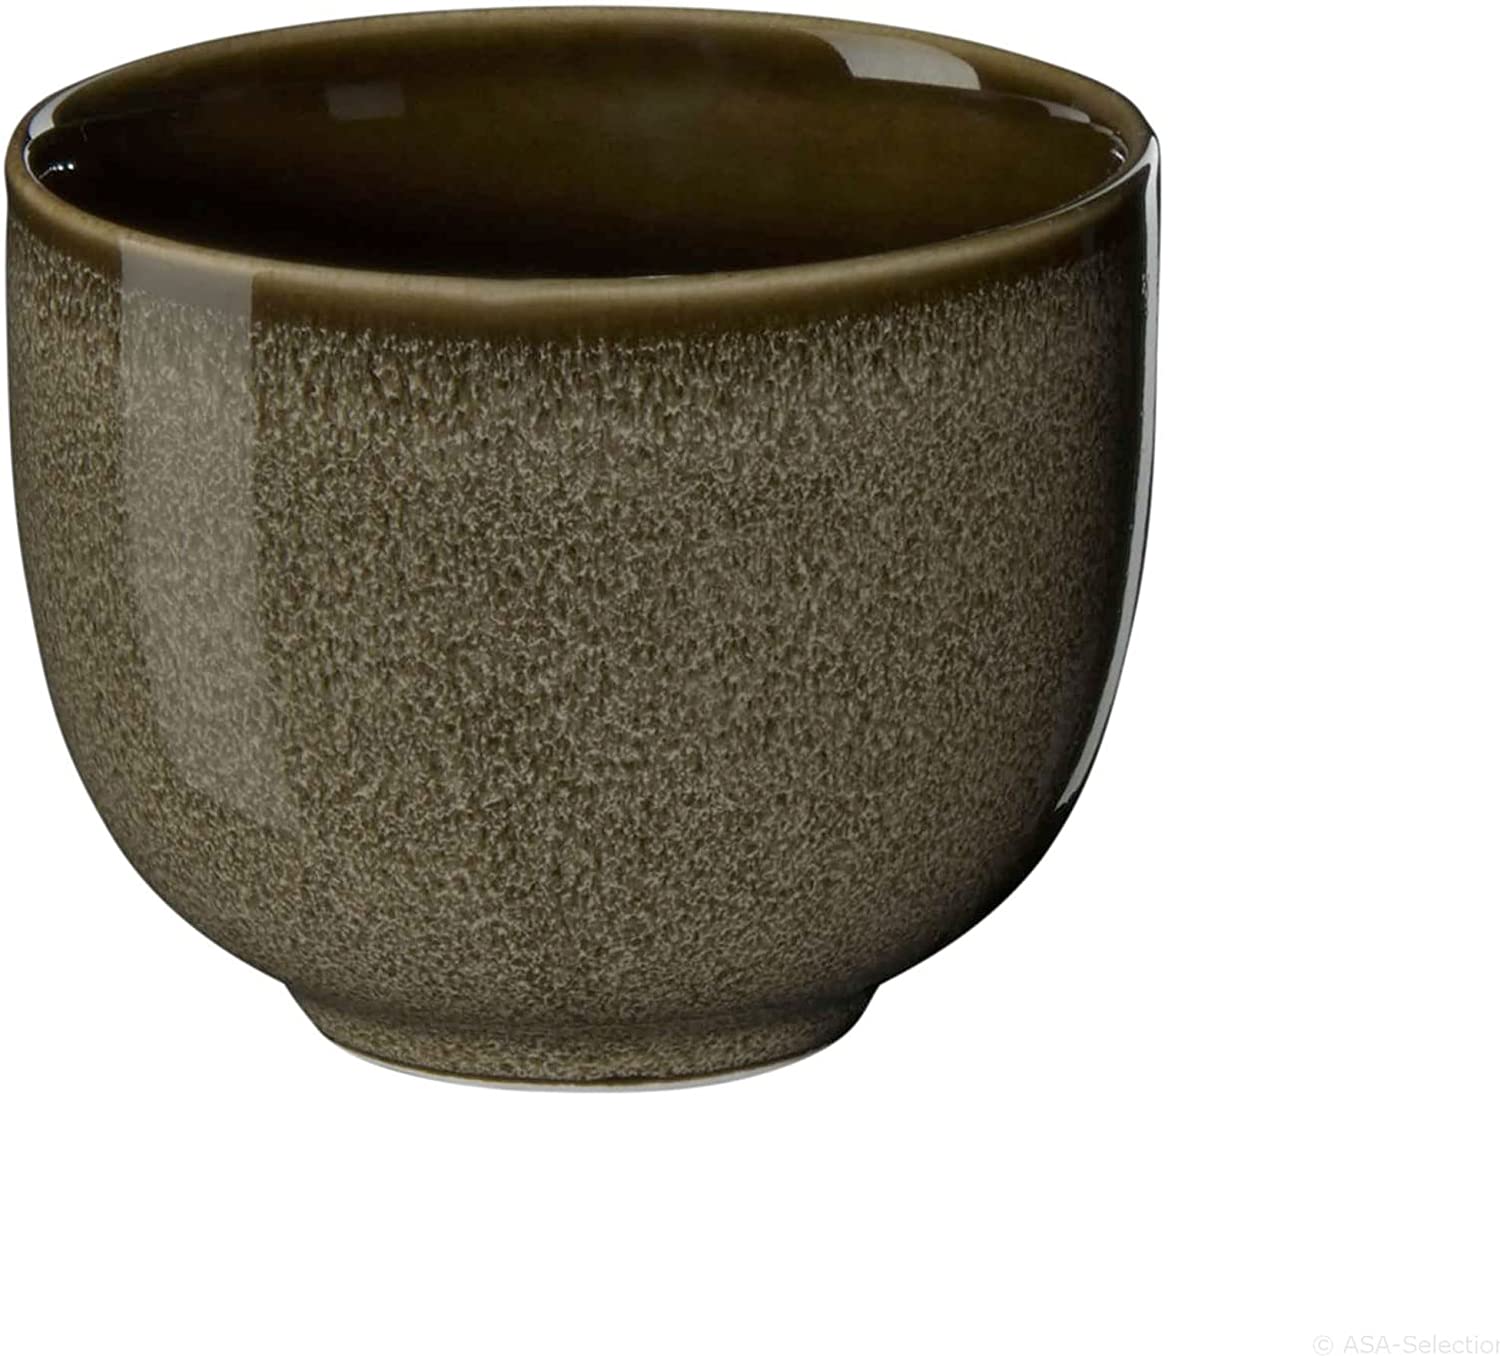 ASA 25410250 Kolibri Tea Bowl, Porcelain